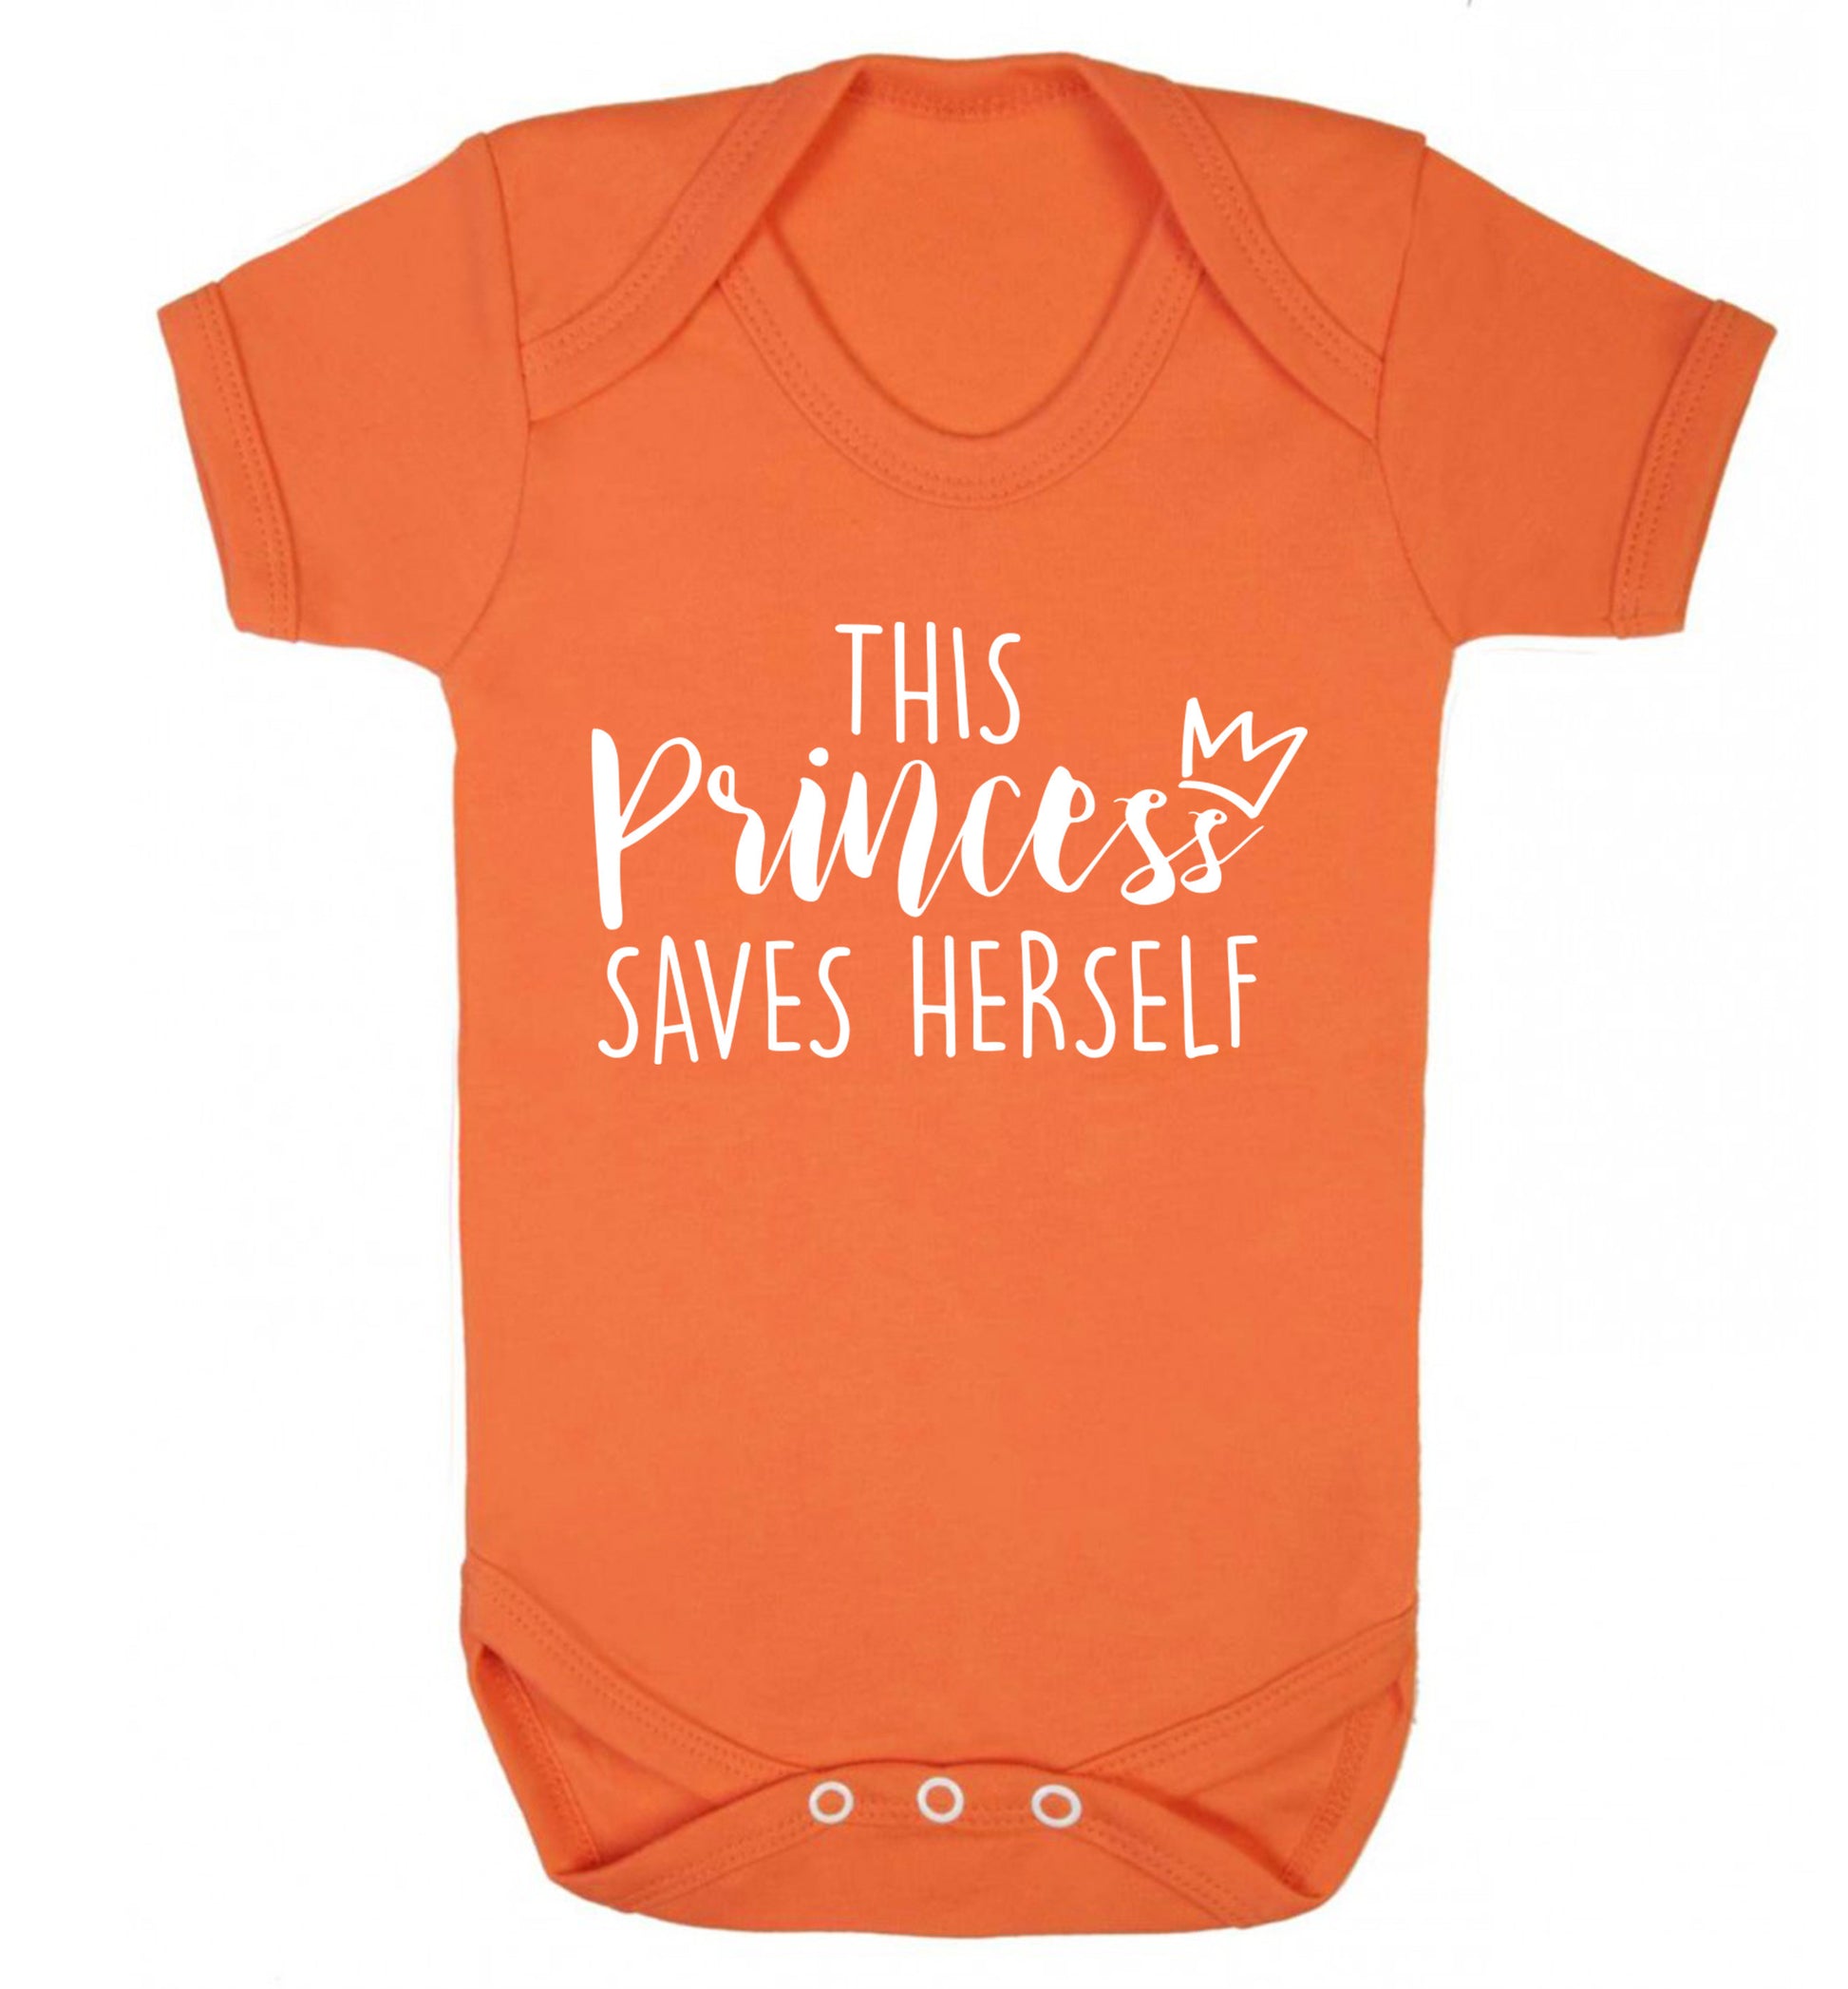 This princess saves herself Baby Vest orange 18-24 months